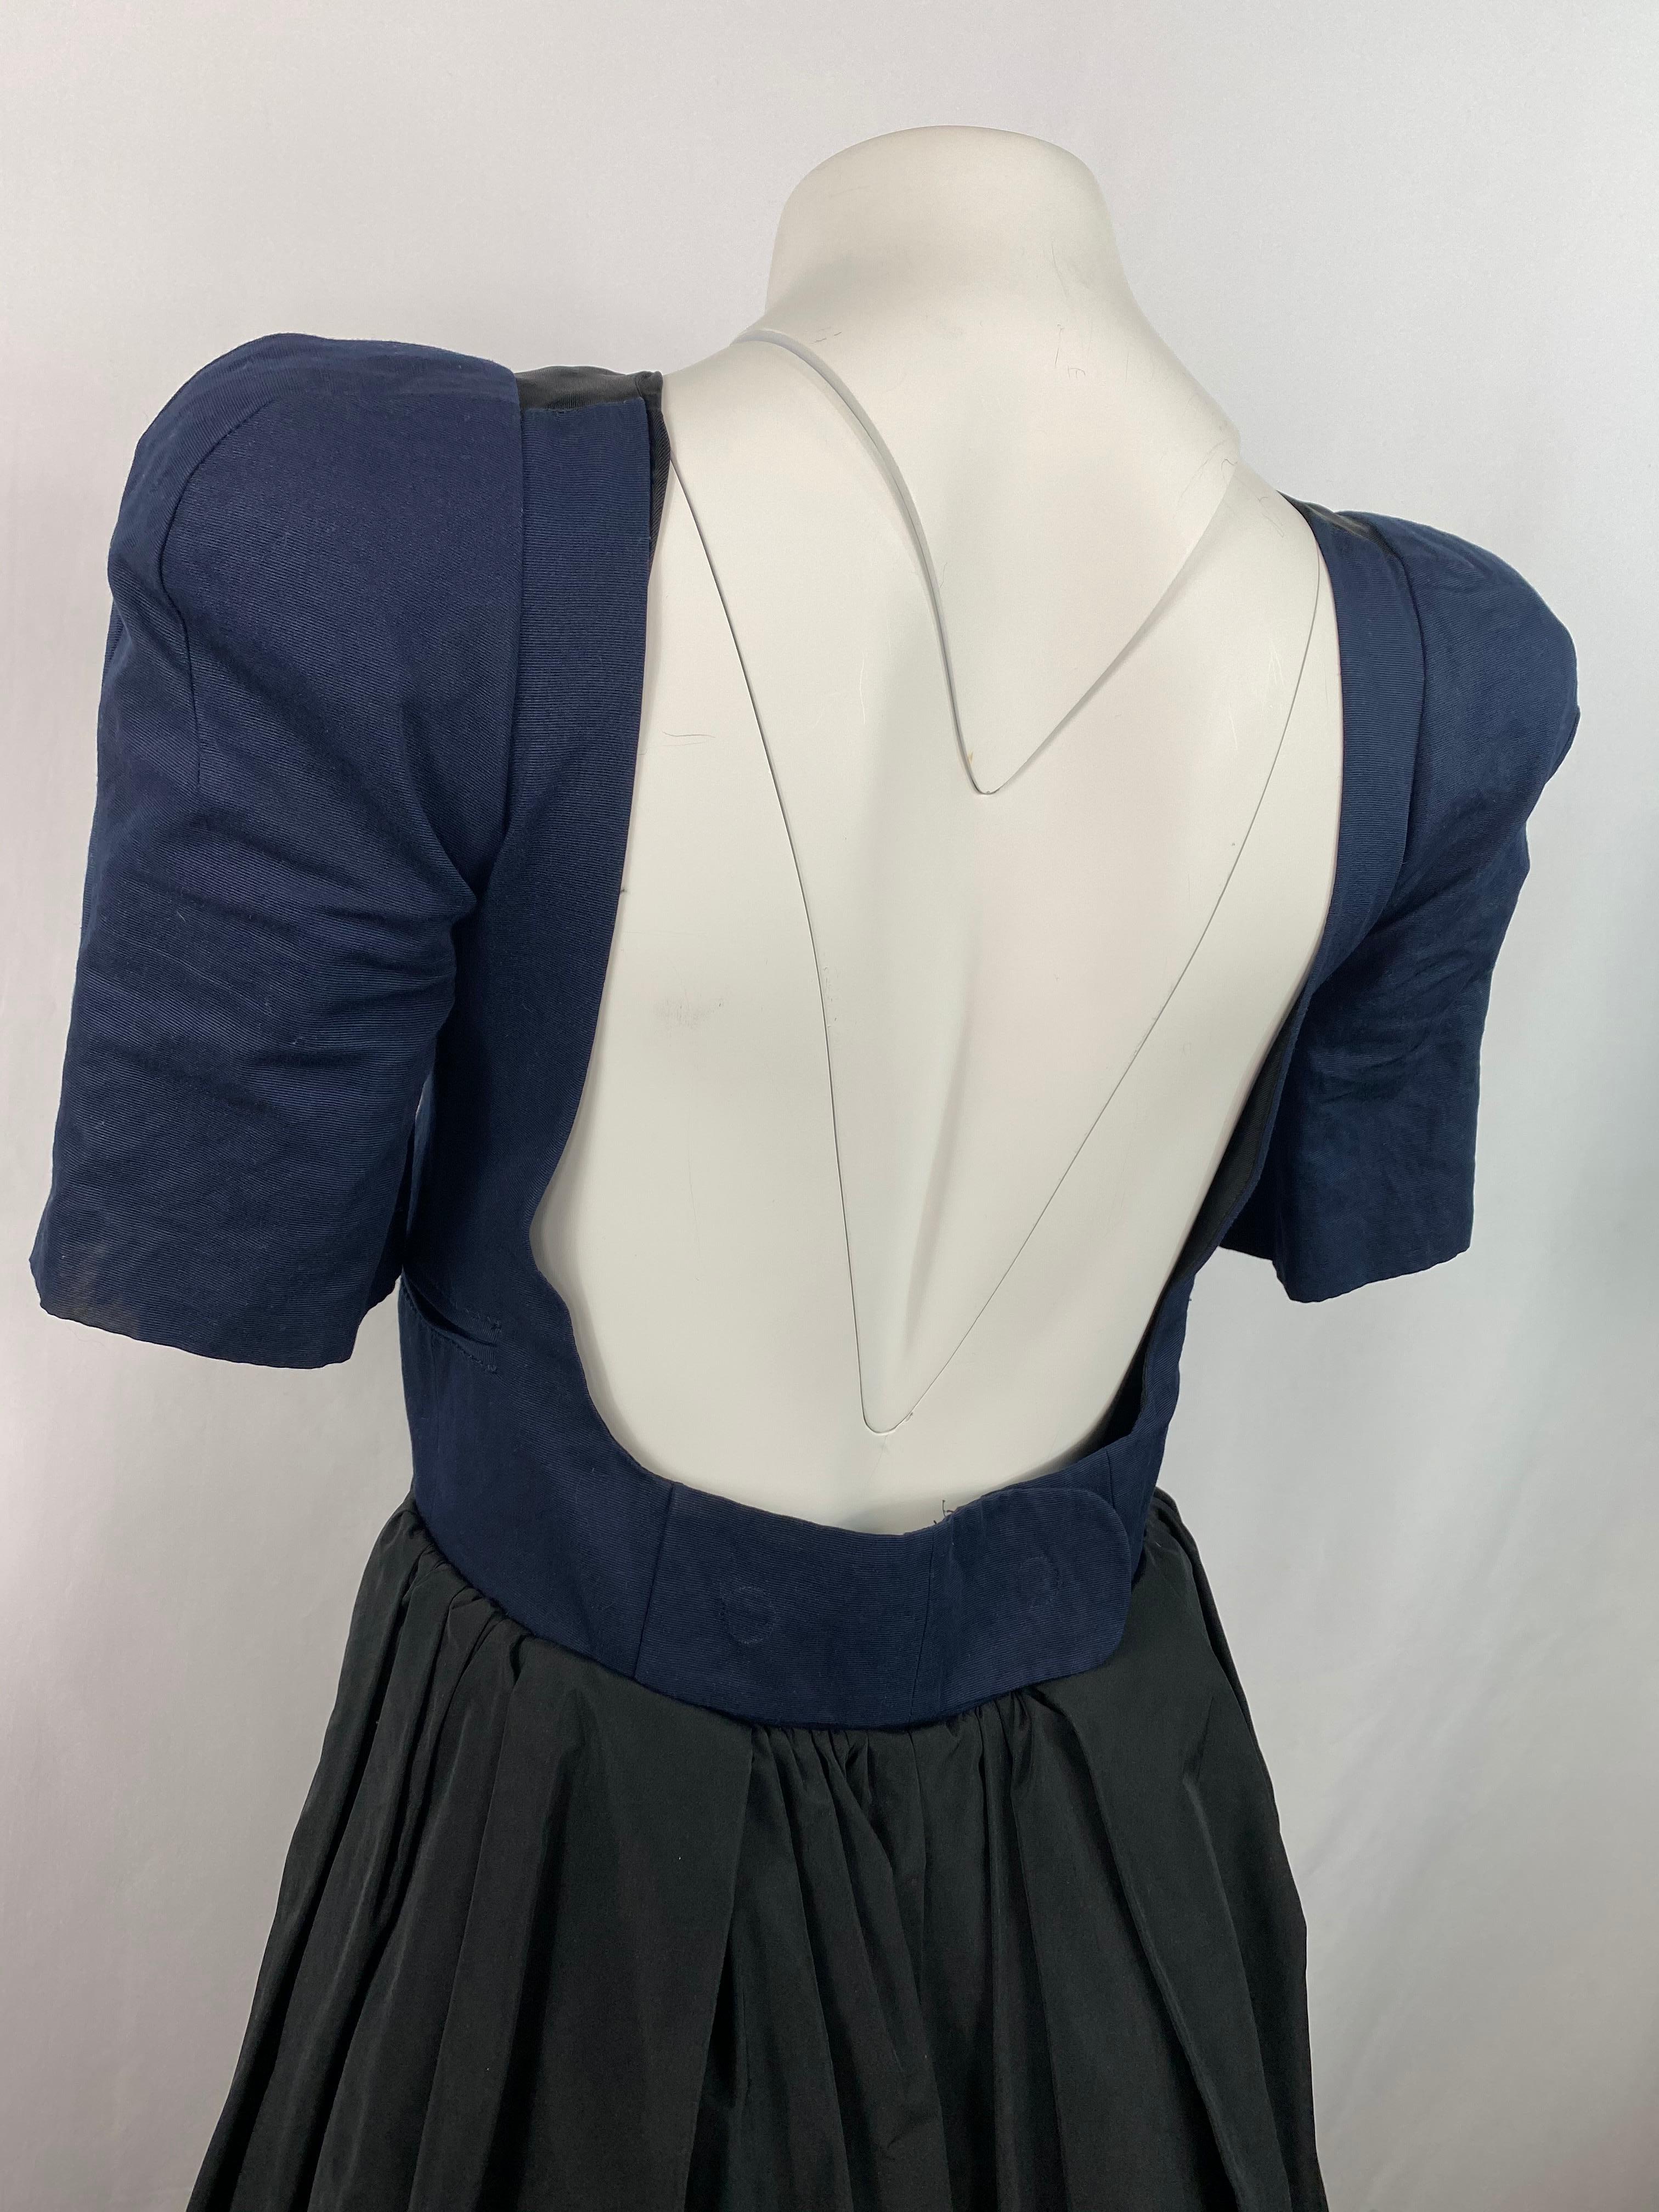 Vintage Carven Navy and Black Short Sleeve Mini Dress w/ Open Back  For Sale 2